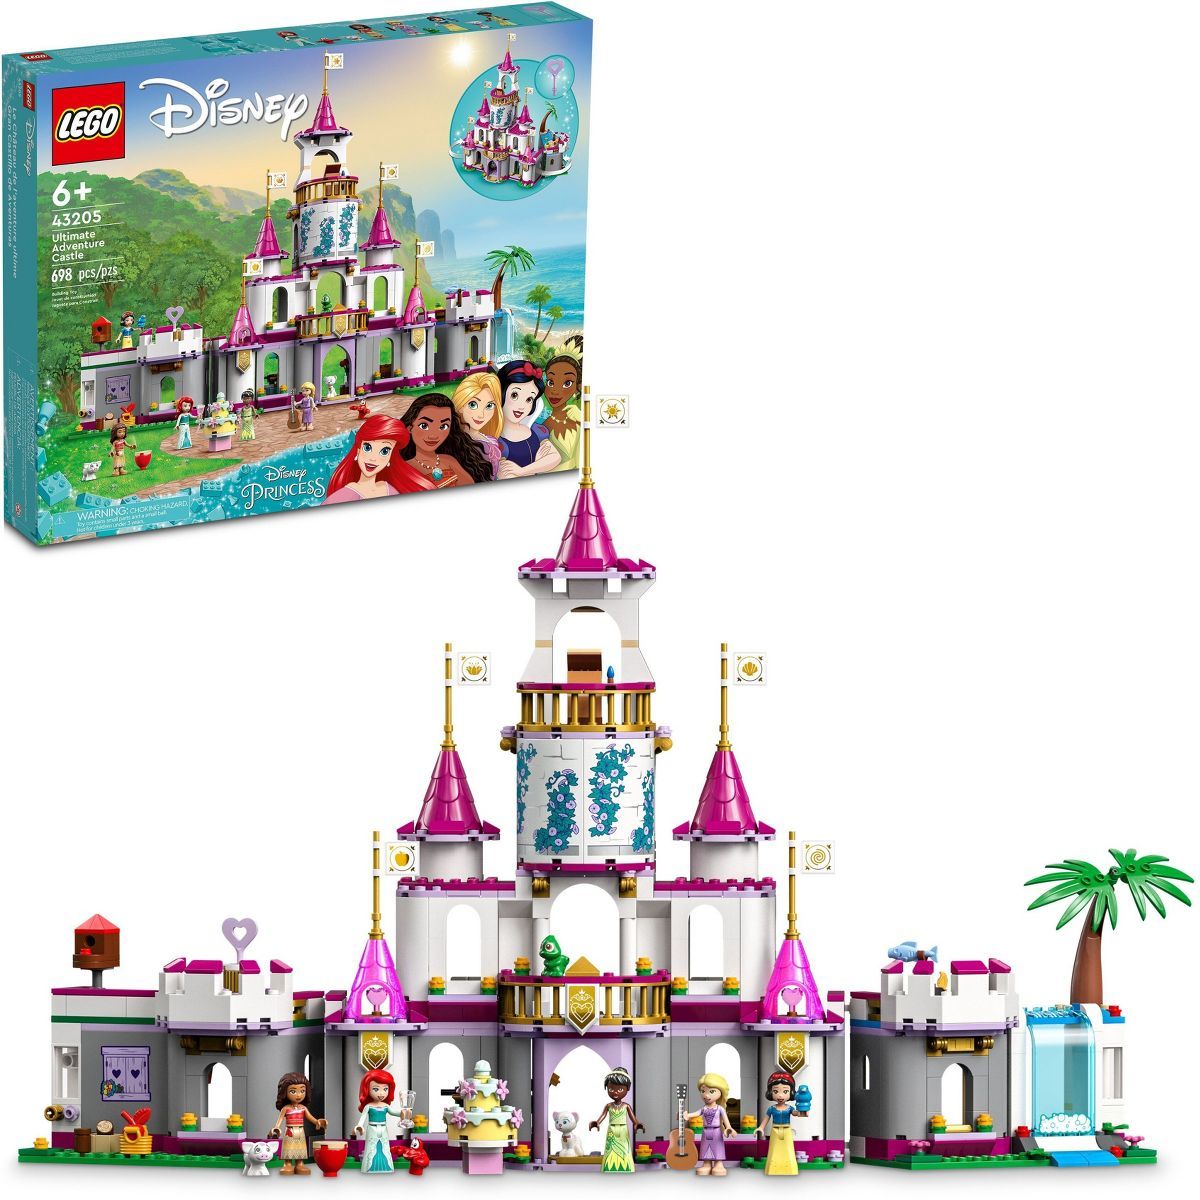 LEGO Disney Princess Ultimate Adventure Castle Playset 43205 | Target